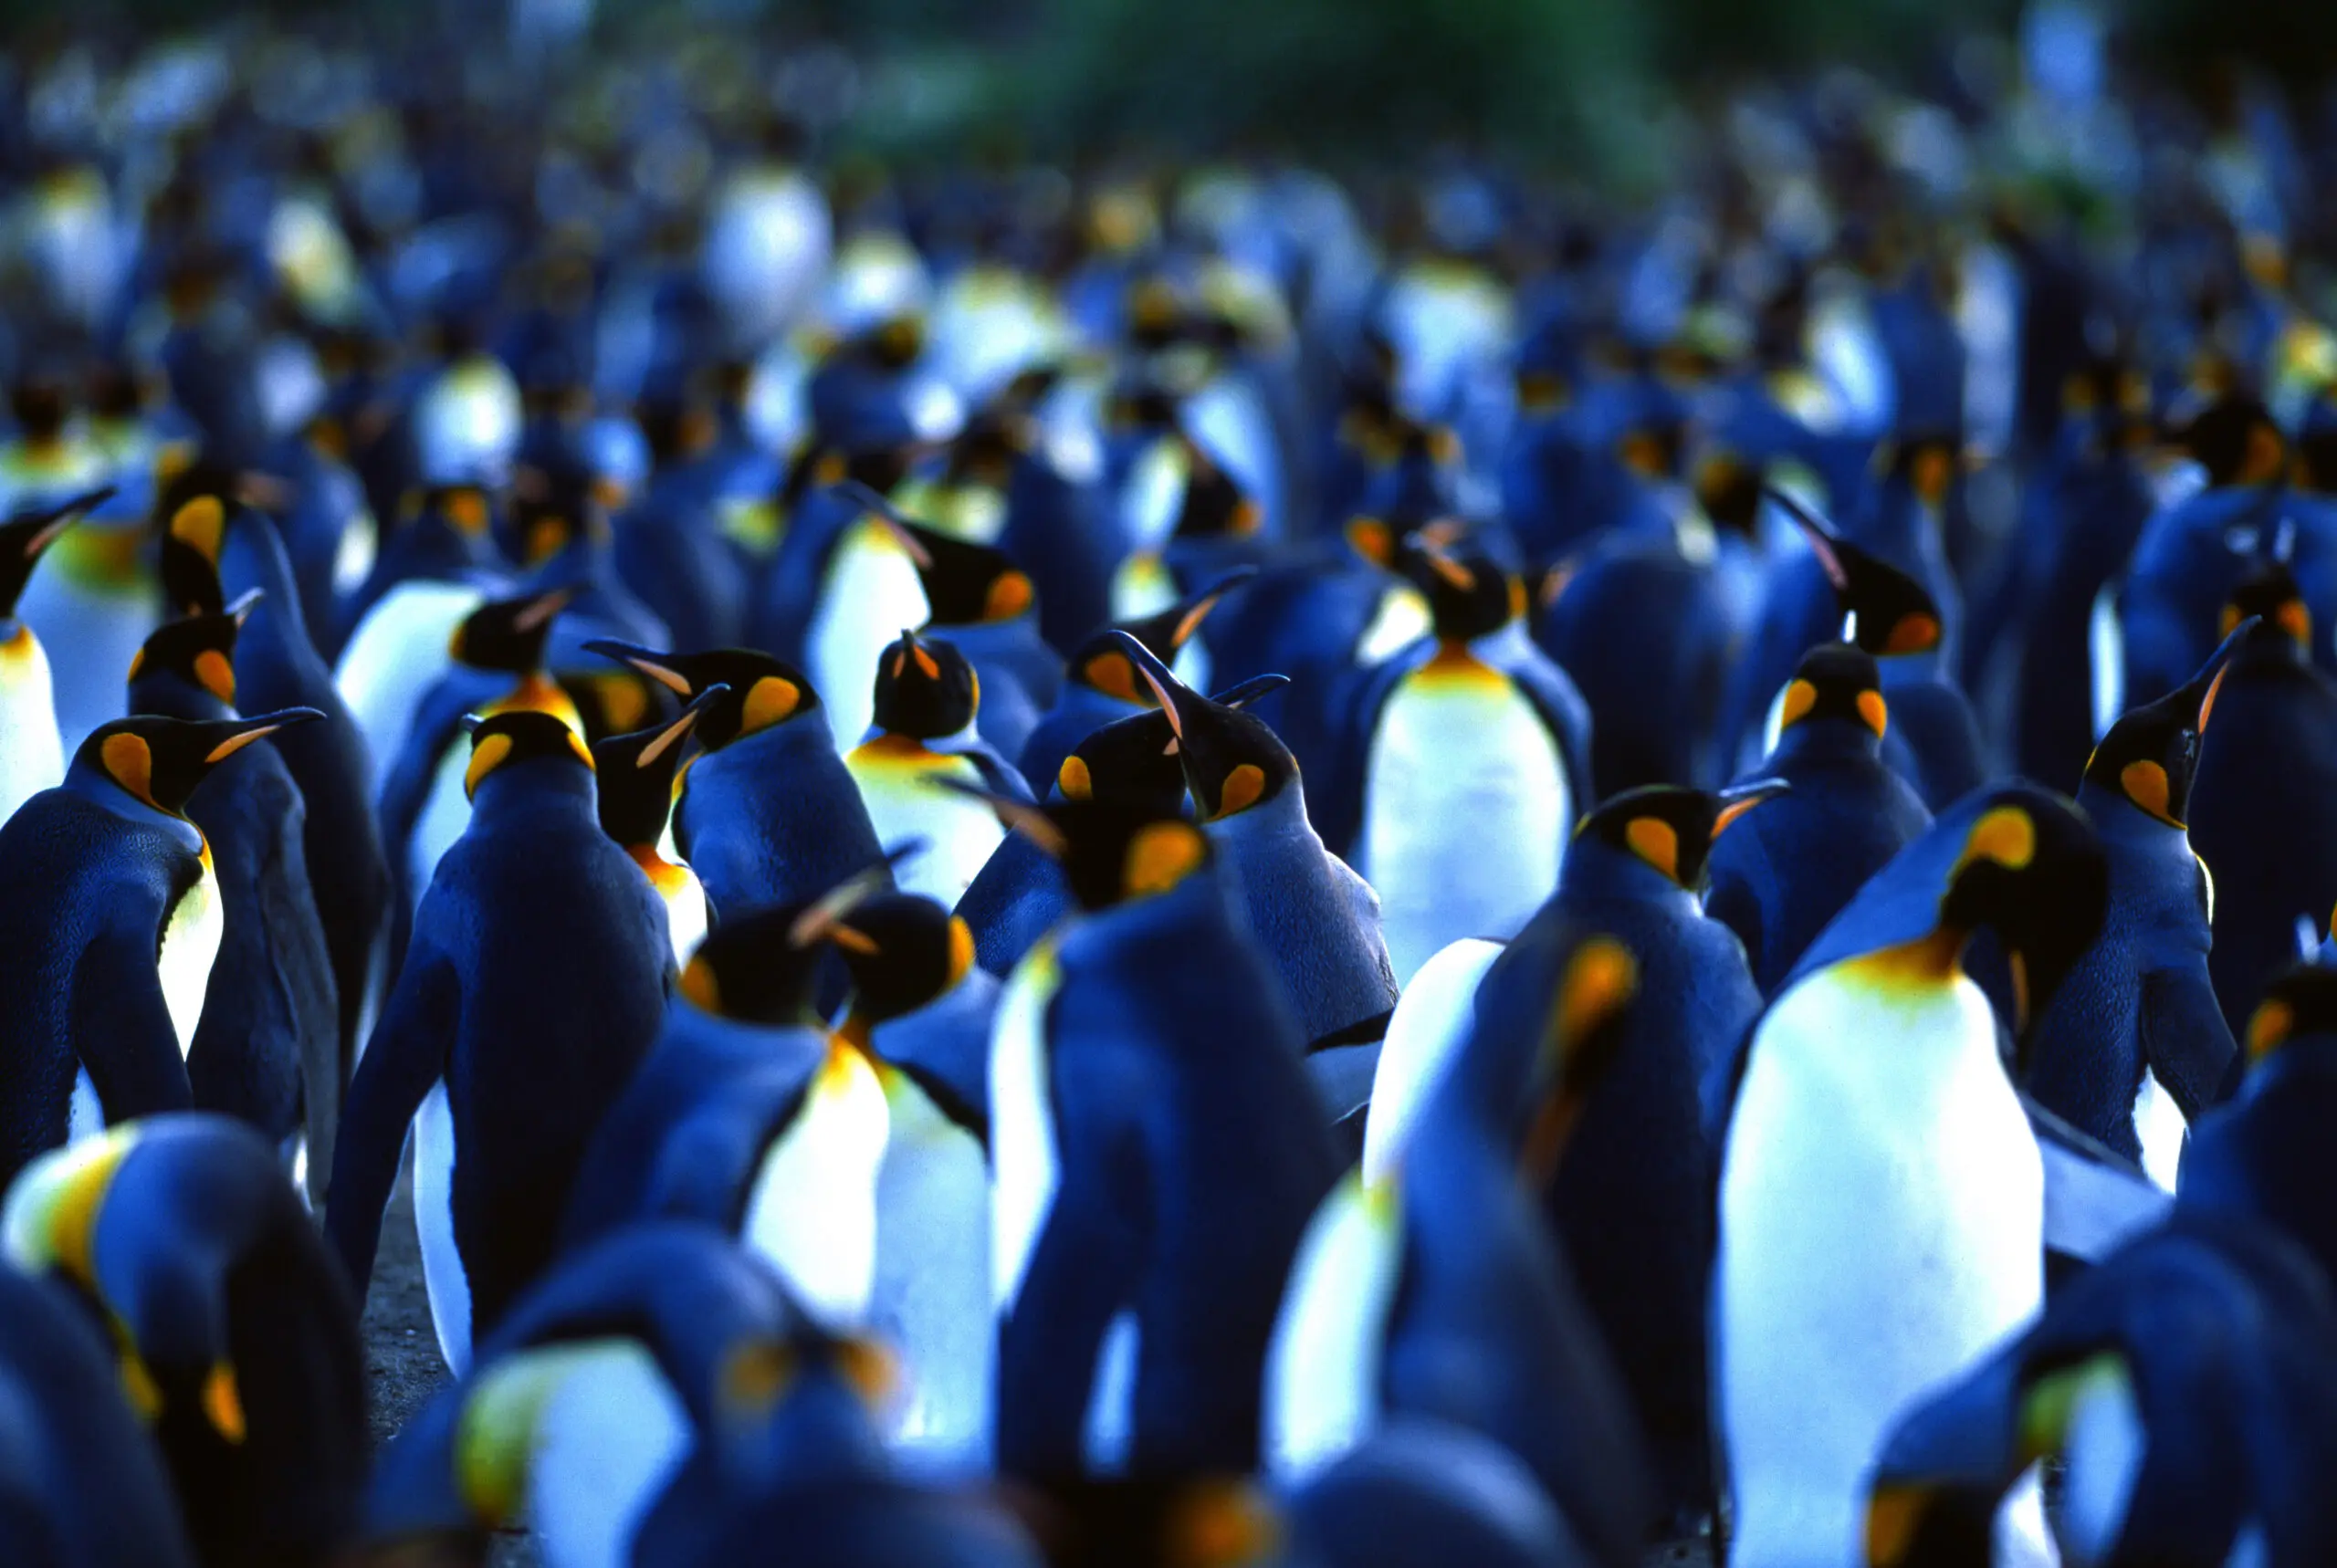 Wandbild (193) Die Menge Pinguine präsentiert: Tiere,Pinguine